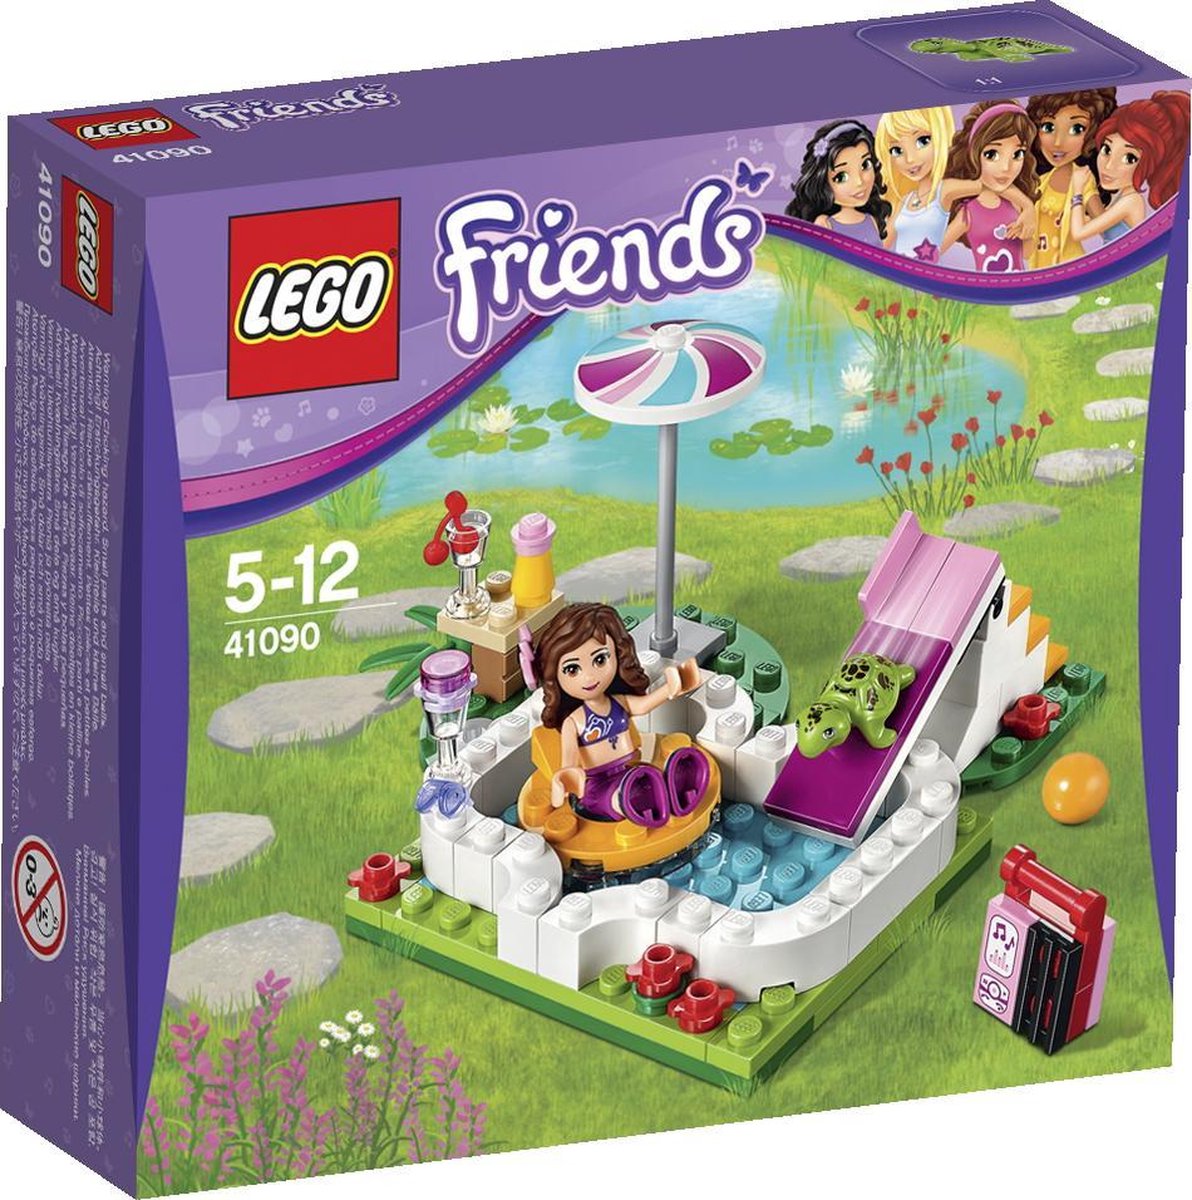 Post dwaas Ontvangende machine LEGO Friends Olivia's Zwembad - 41090 | bol.com